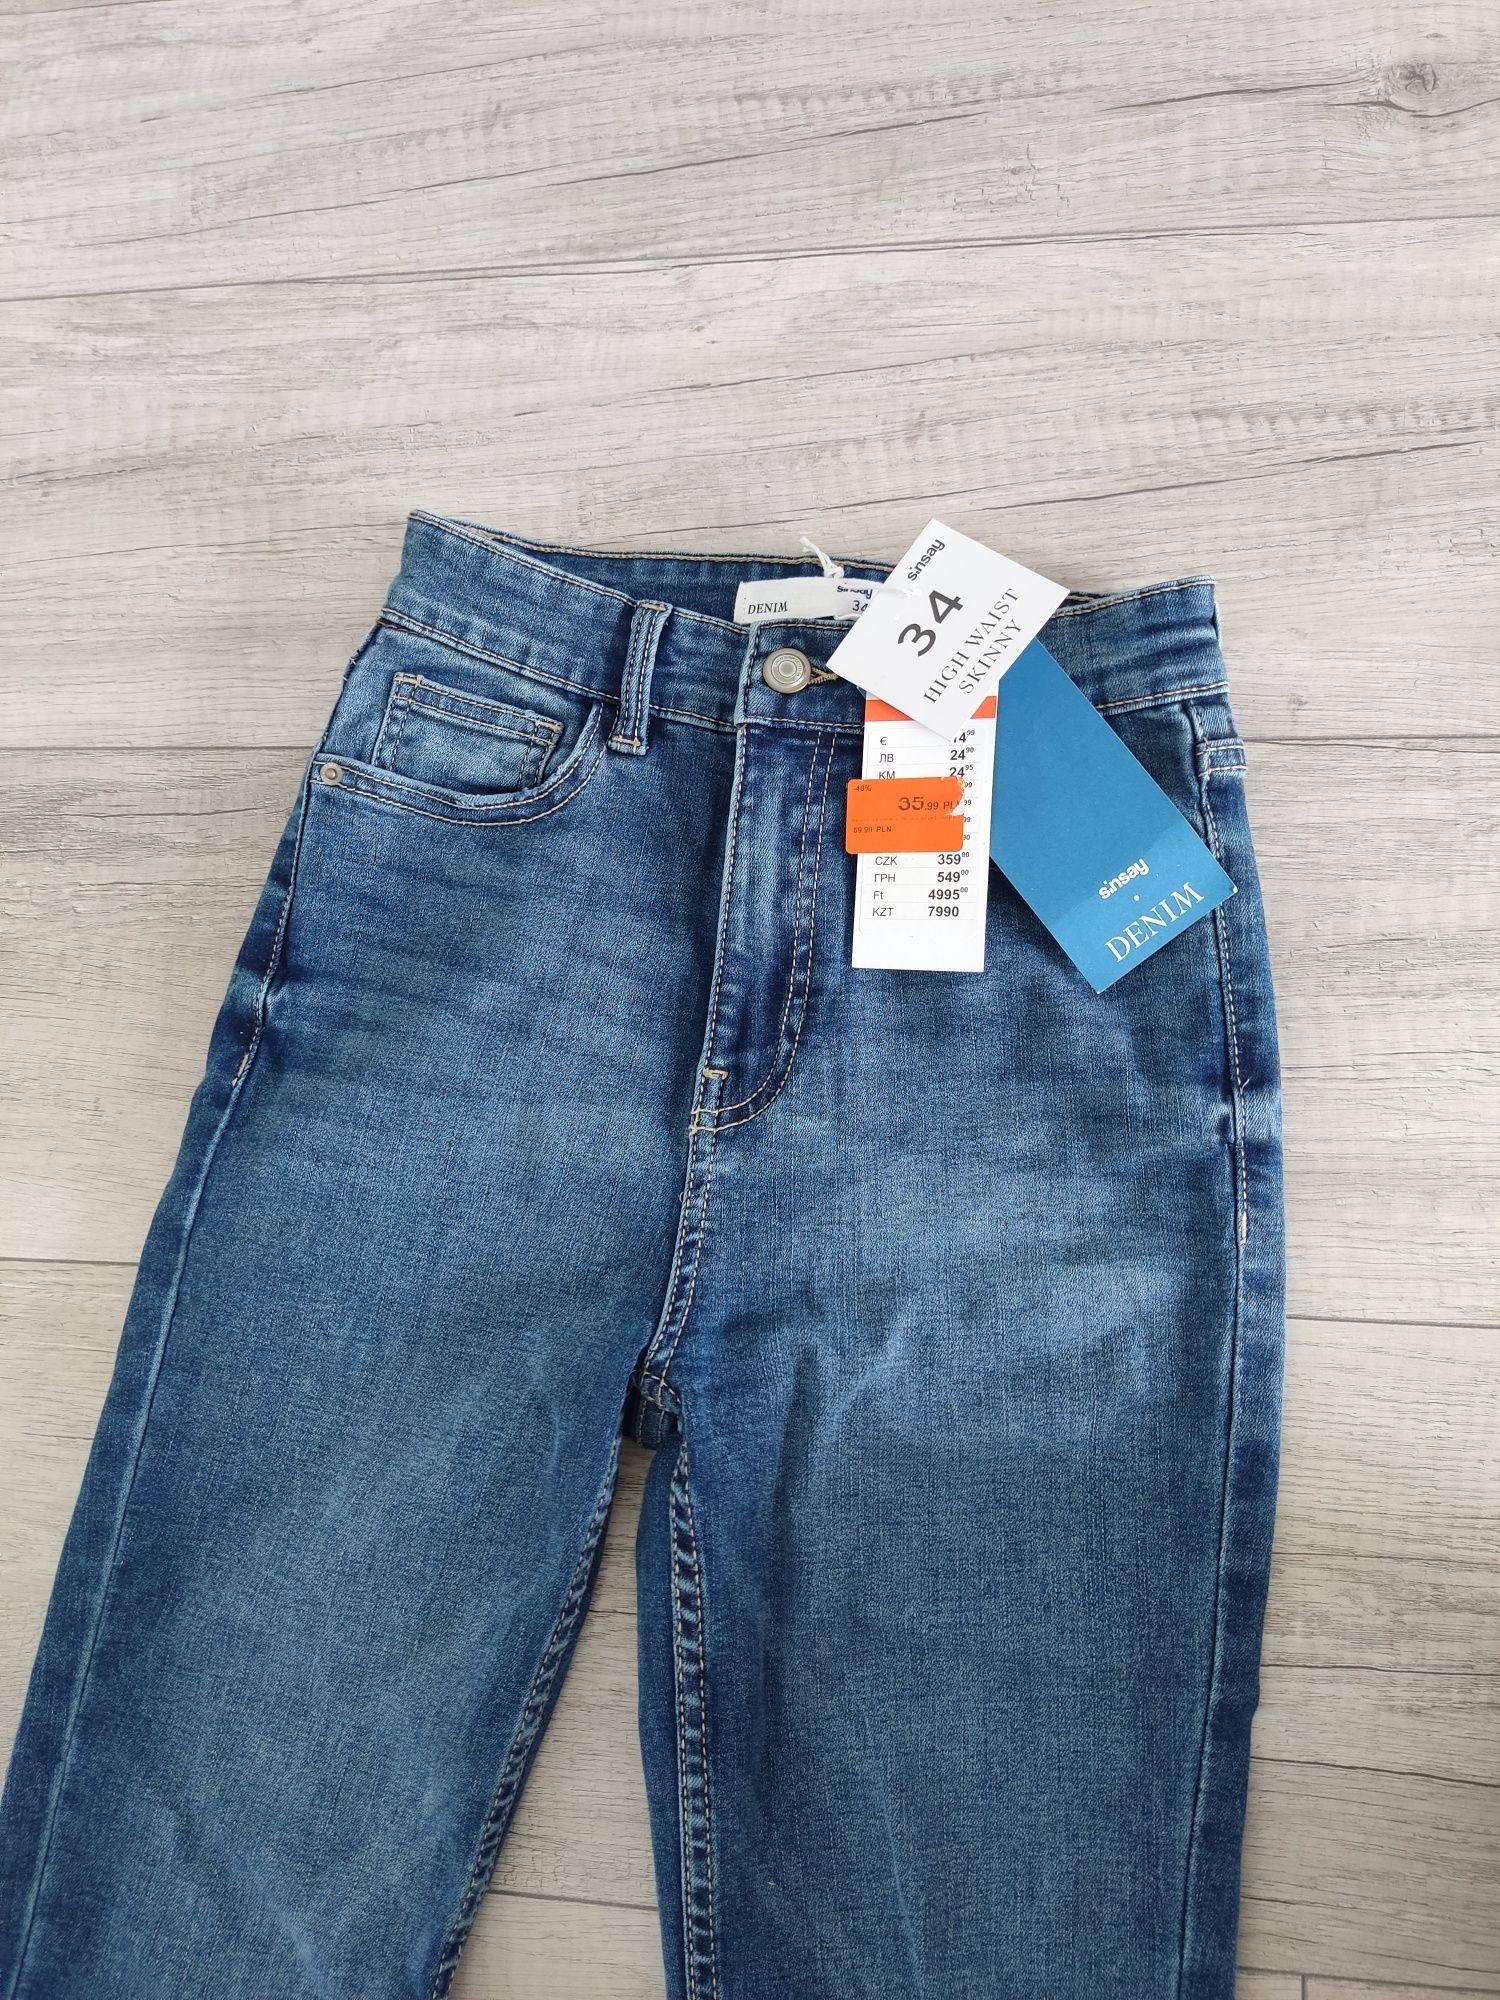 Spodnie jeansy z wysokim stanem Sinsay 34